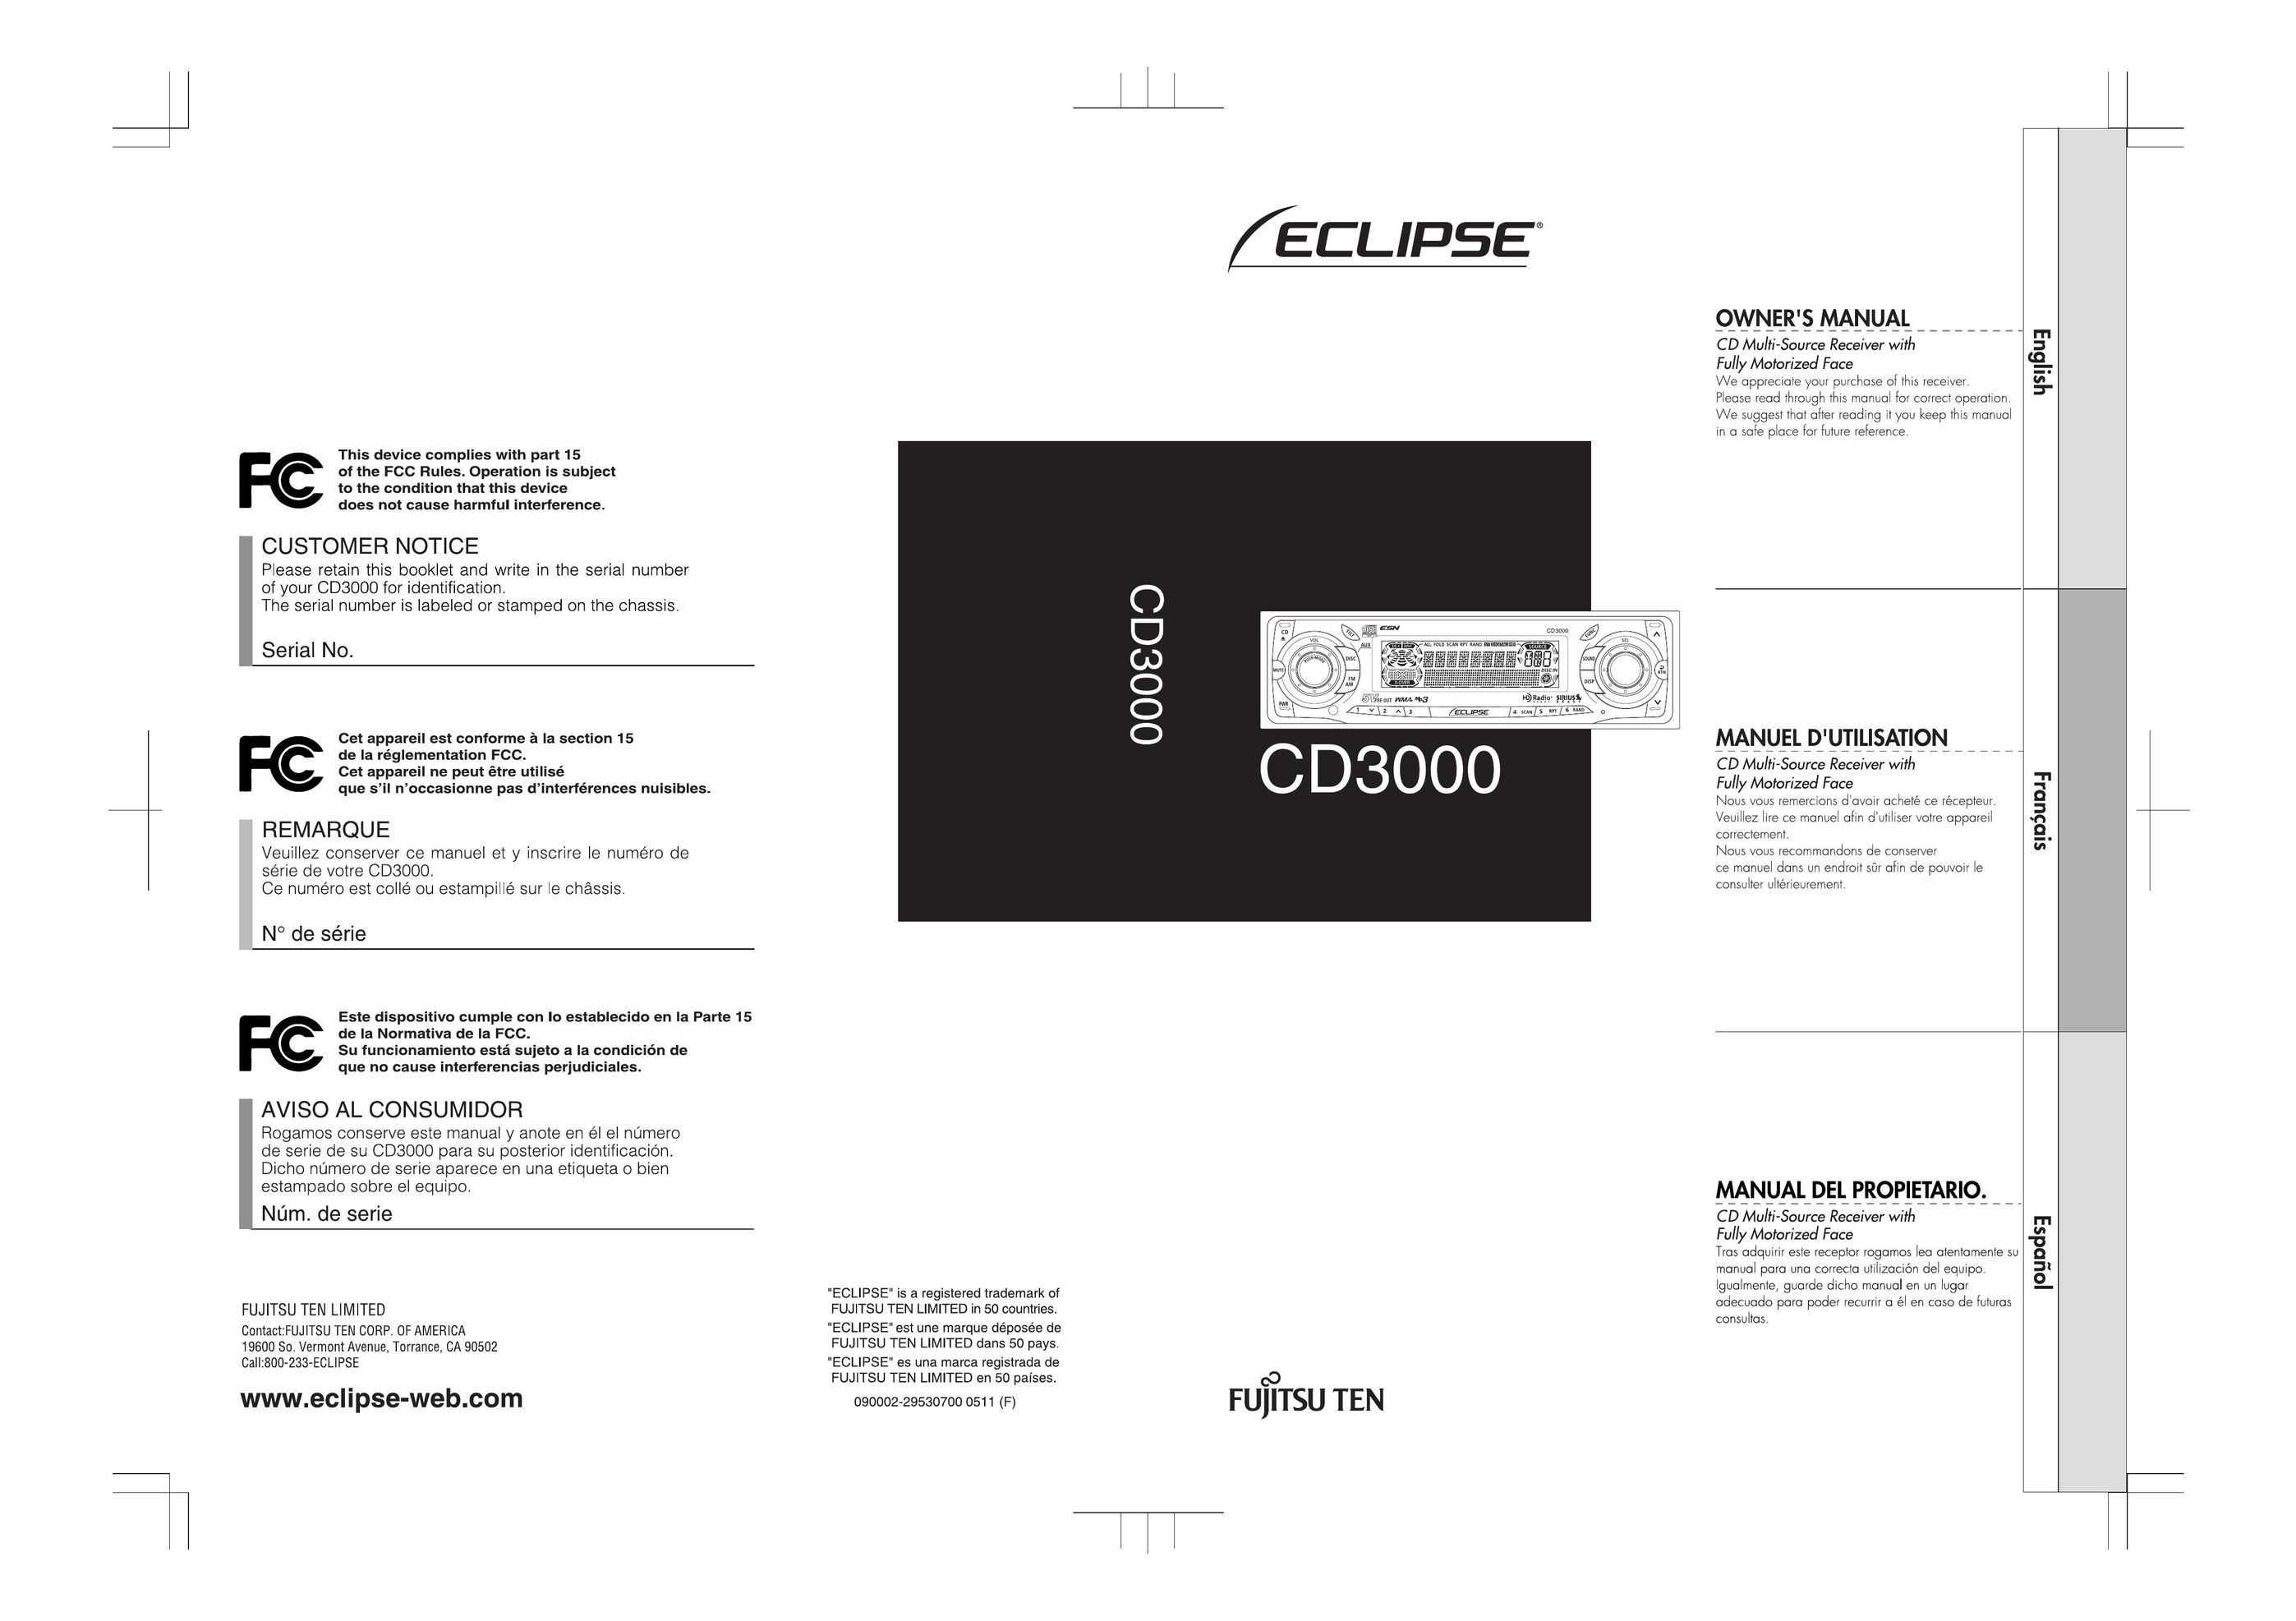 Eclipse - Fujitsu Ten CD3000 Car Video System User Manual